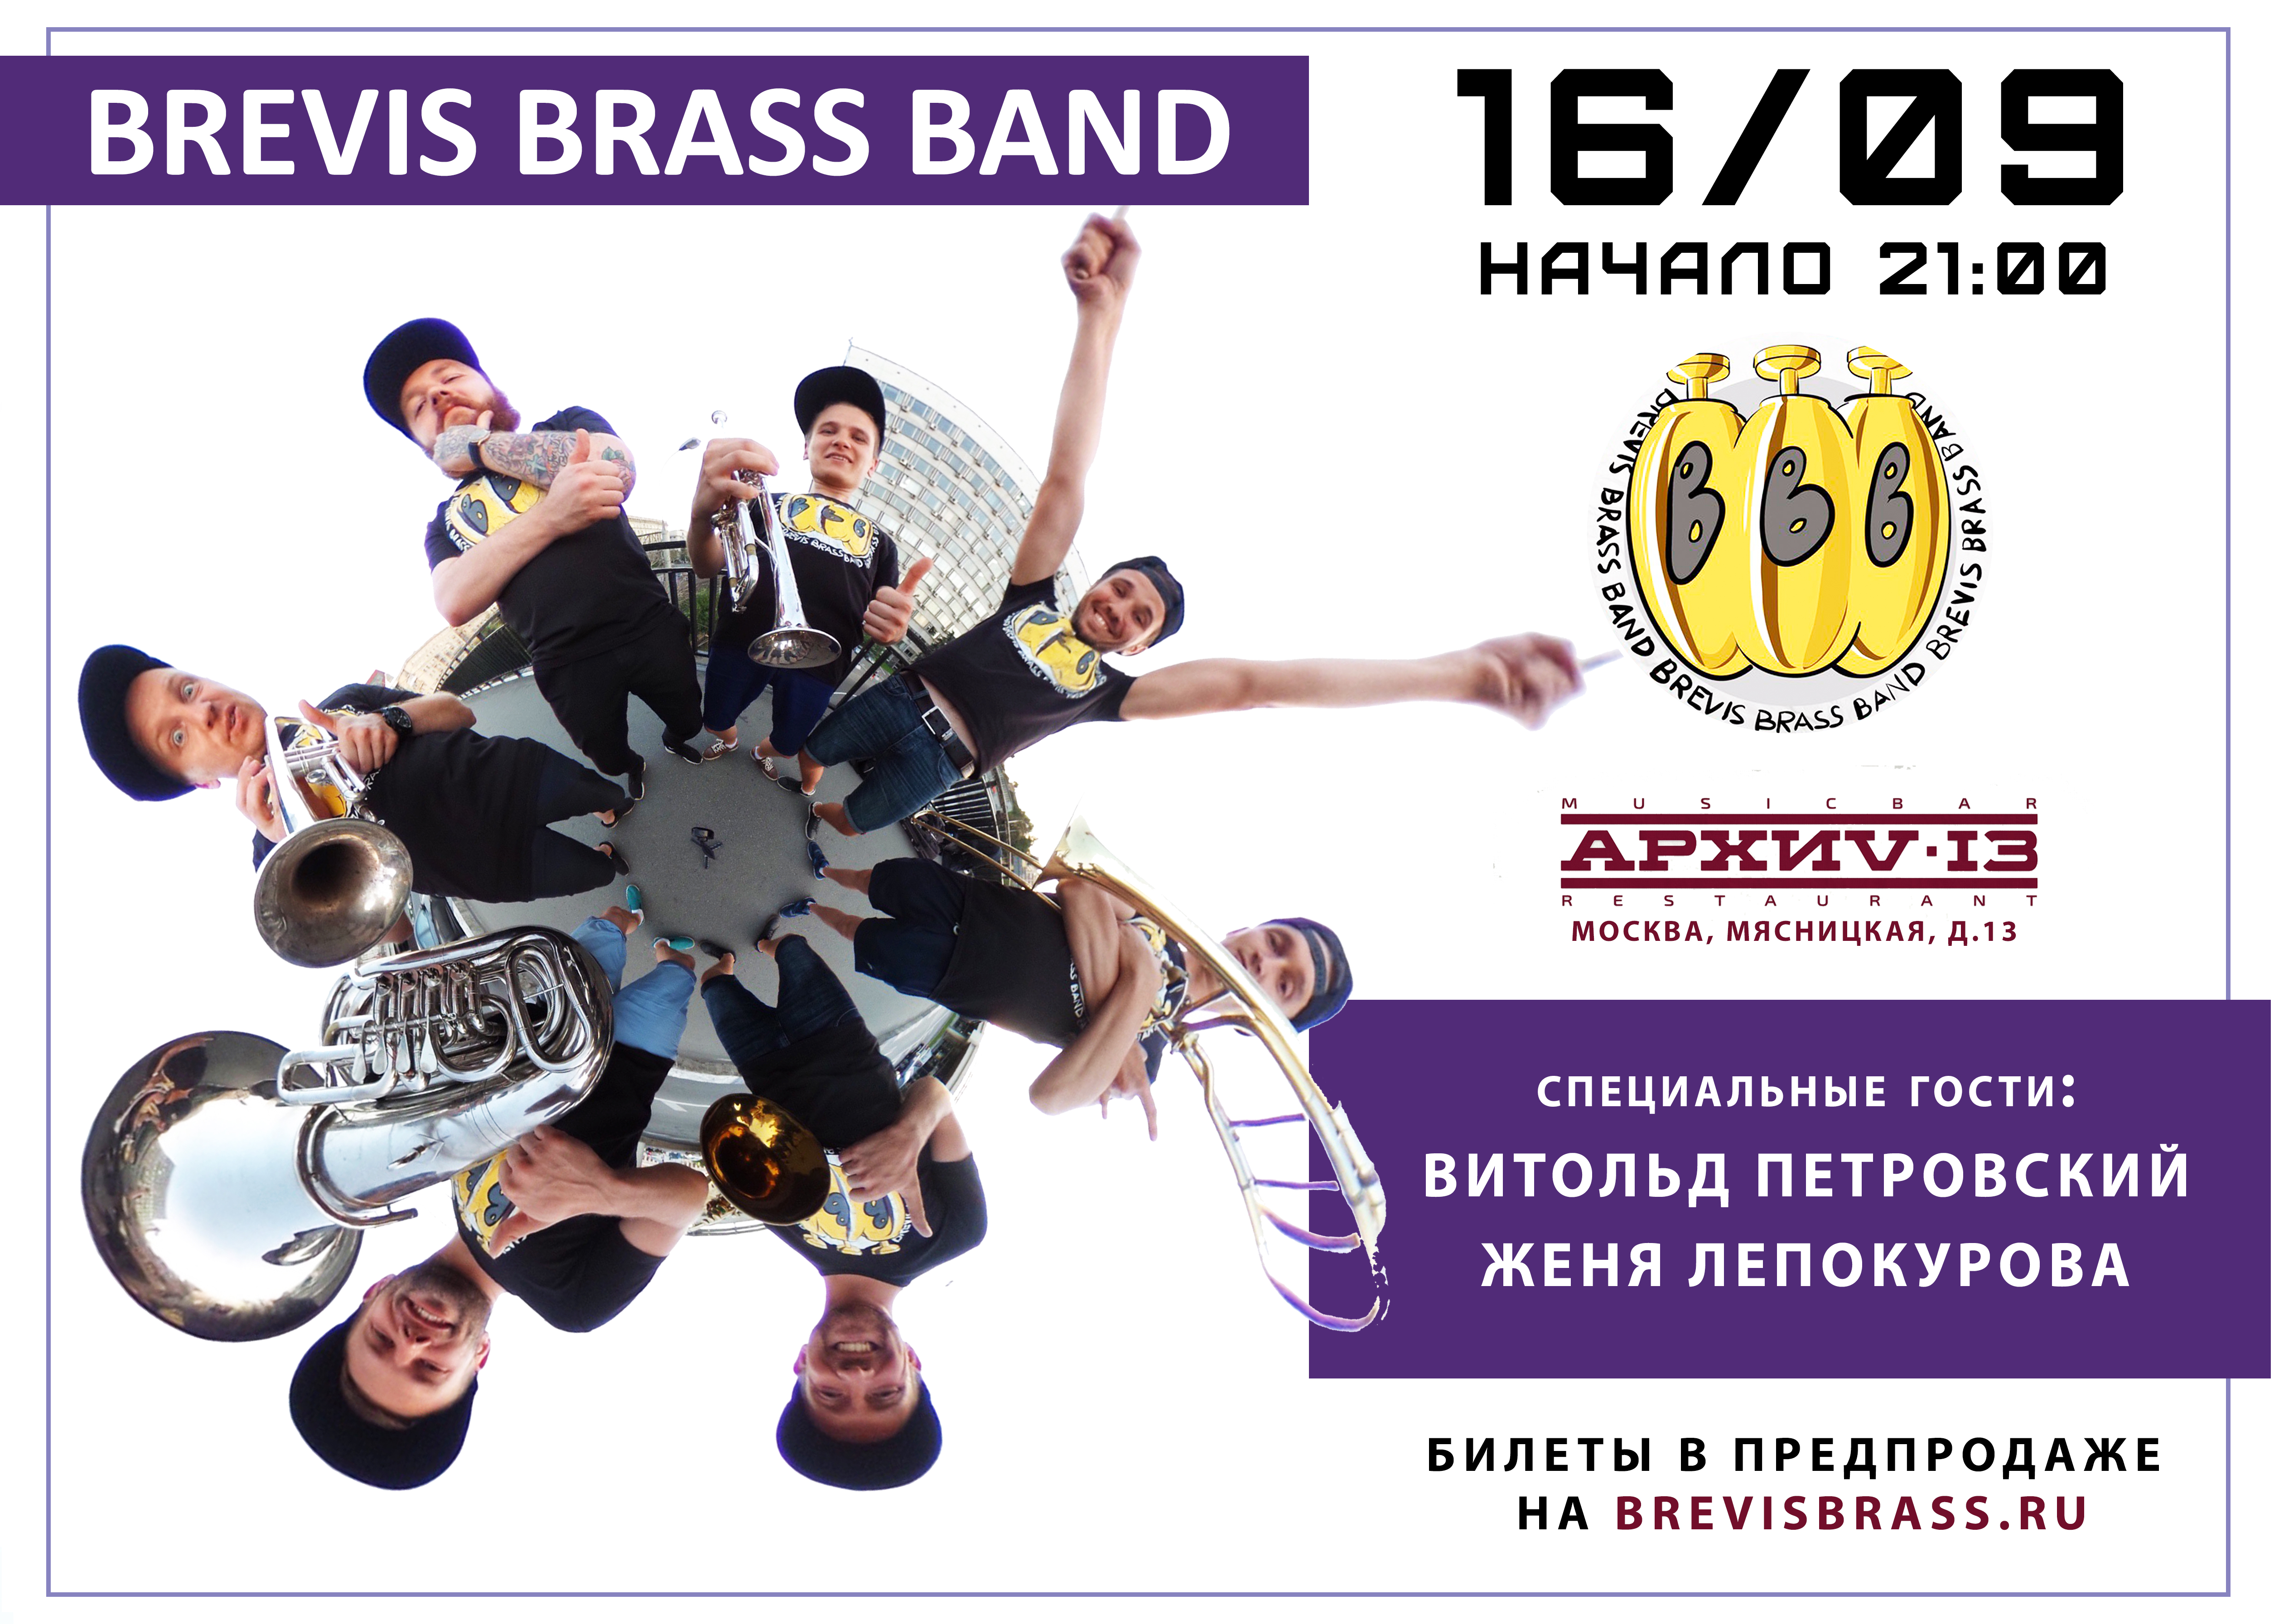 brevis brass band 16 сентября клуб архив 13 москва